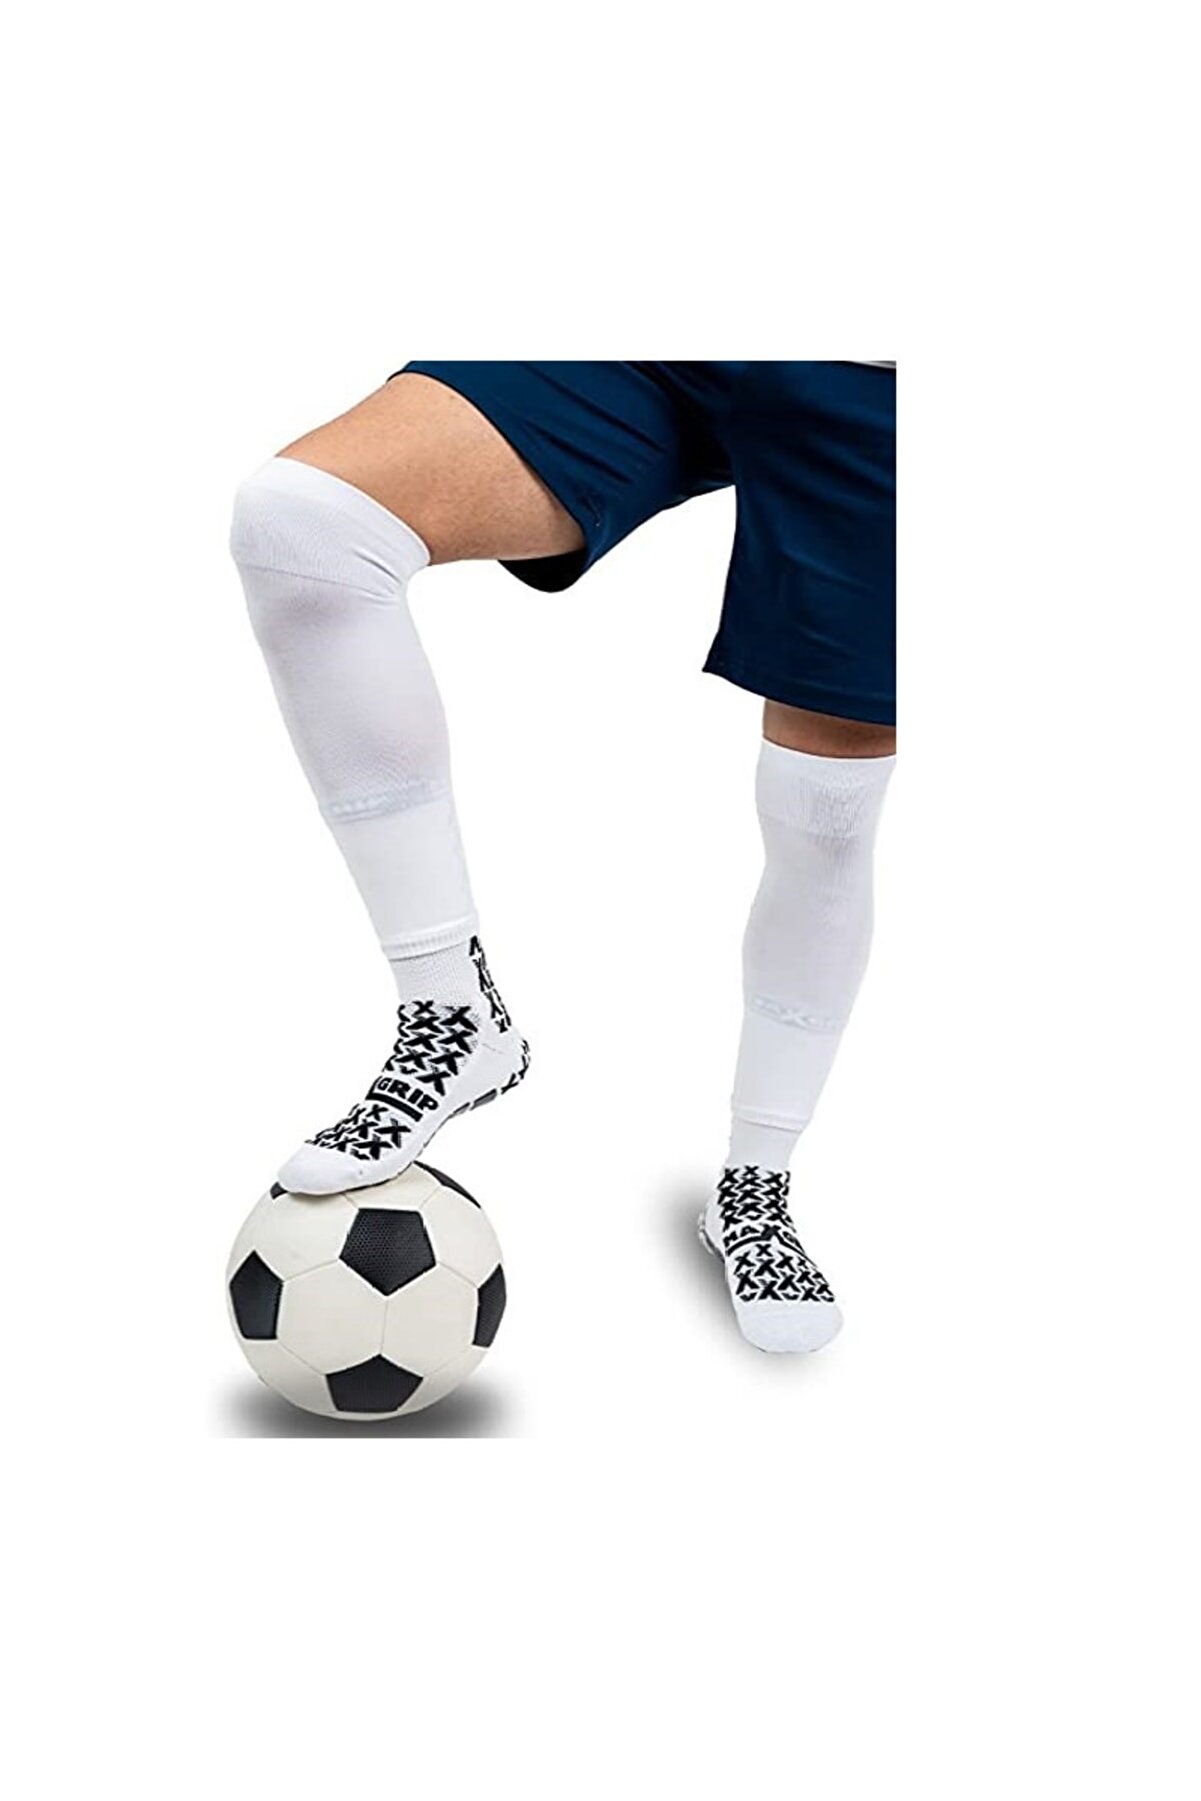 parypary Tabansız Kesik Futbol Çorapı Tüm Spor Aktiviteler